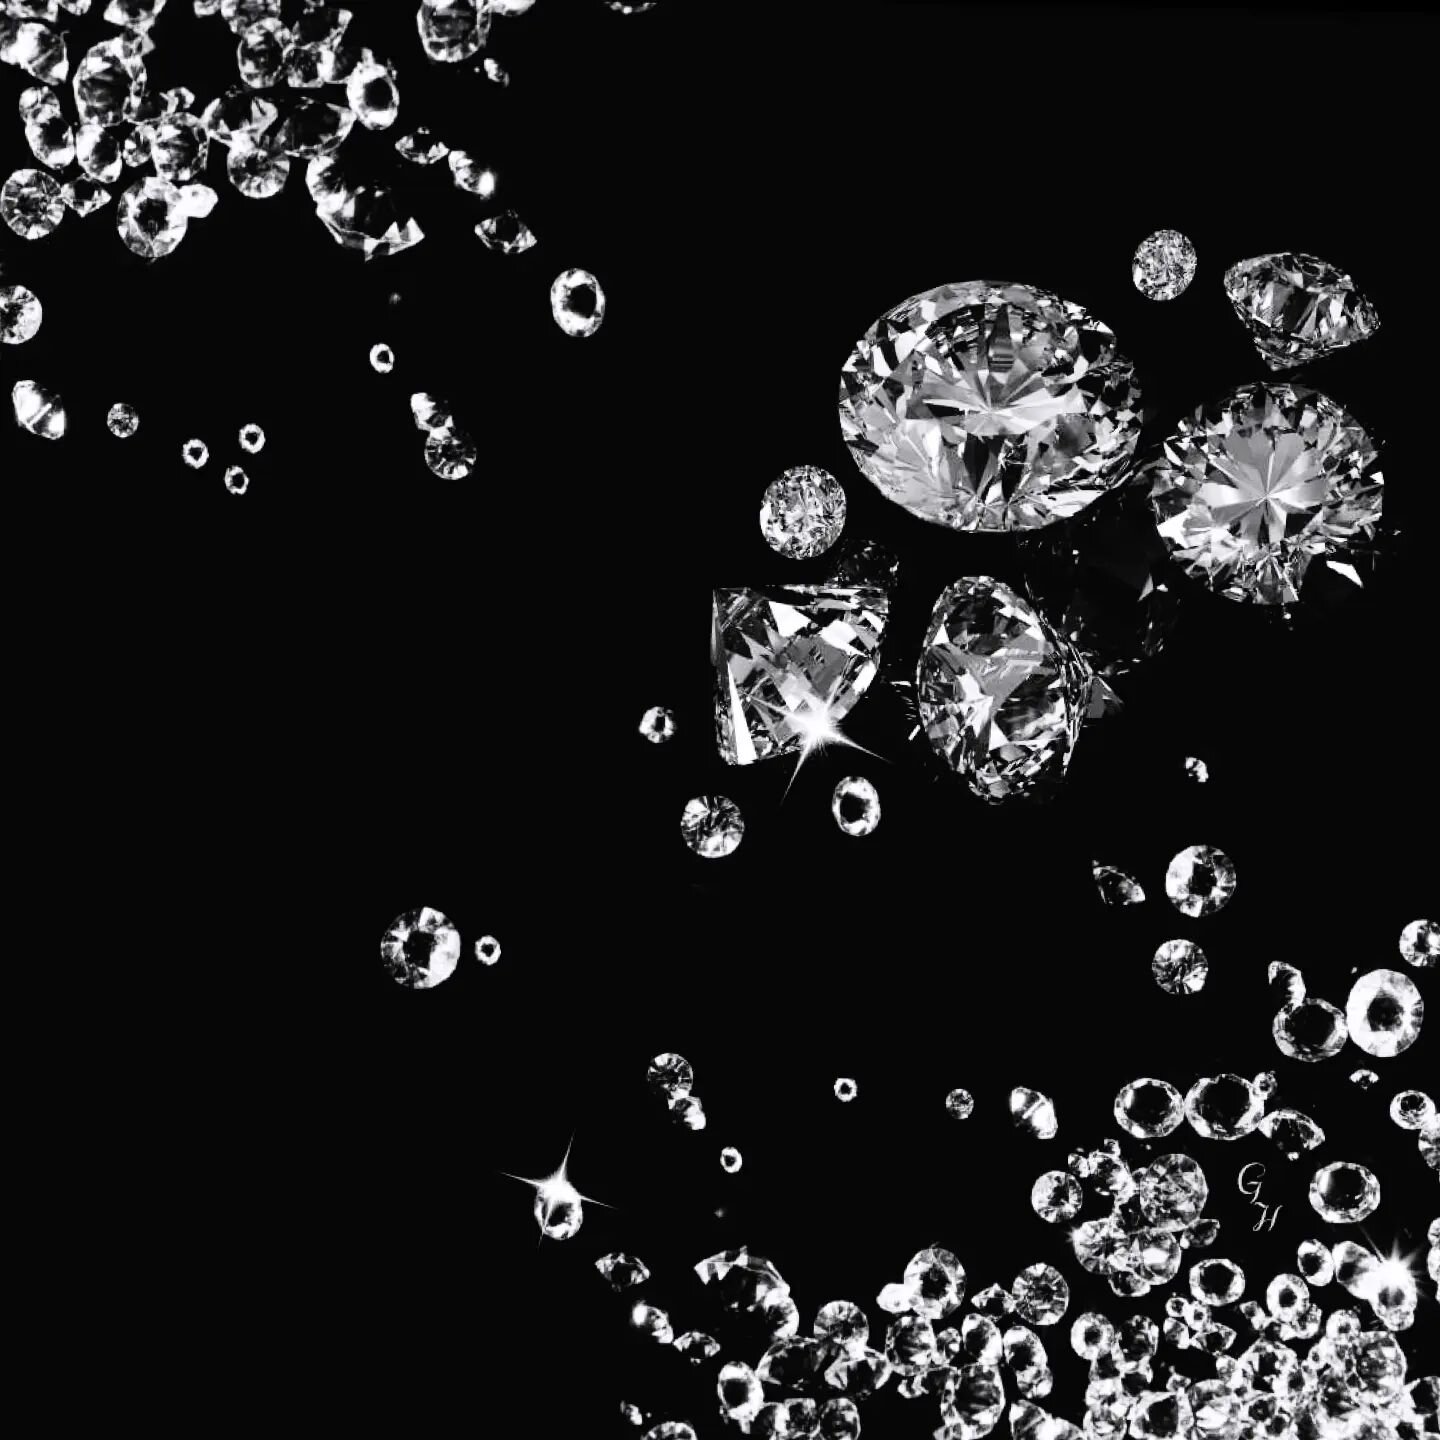 Diamonds by DEBORAH BARNET
Serving up Ice since 1979
.
.
.
.
.
.
.
.
.

#deborahbarnet&nbsp; #diamondlove #diamondheart #fashioninfluencer #diamondcollection #diamond #fashionstylist #handmadejewelry #luxuryfashion #jewellerylover #diamondjewelry #di